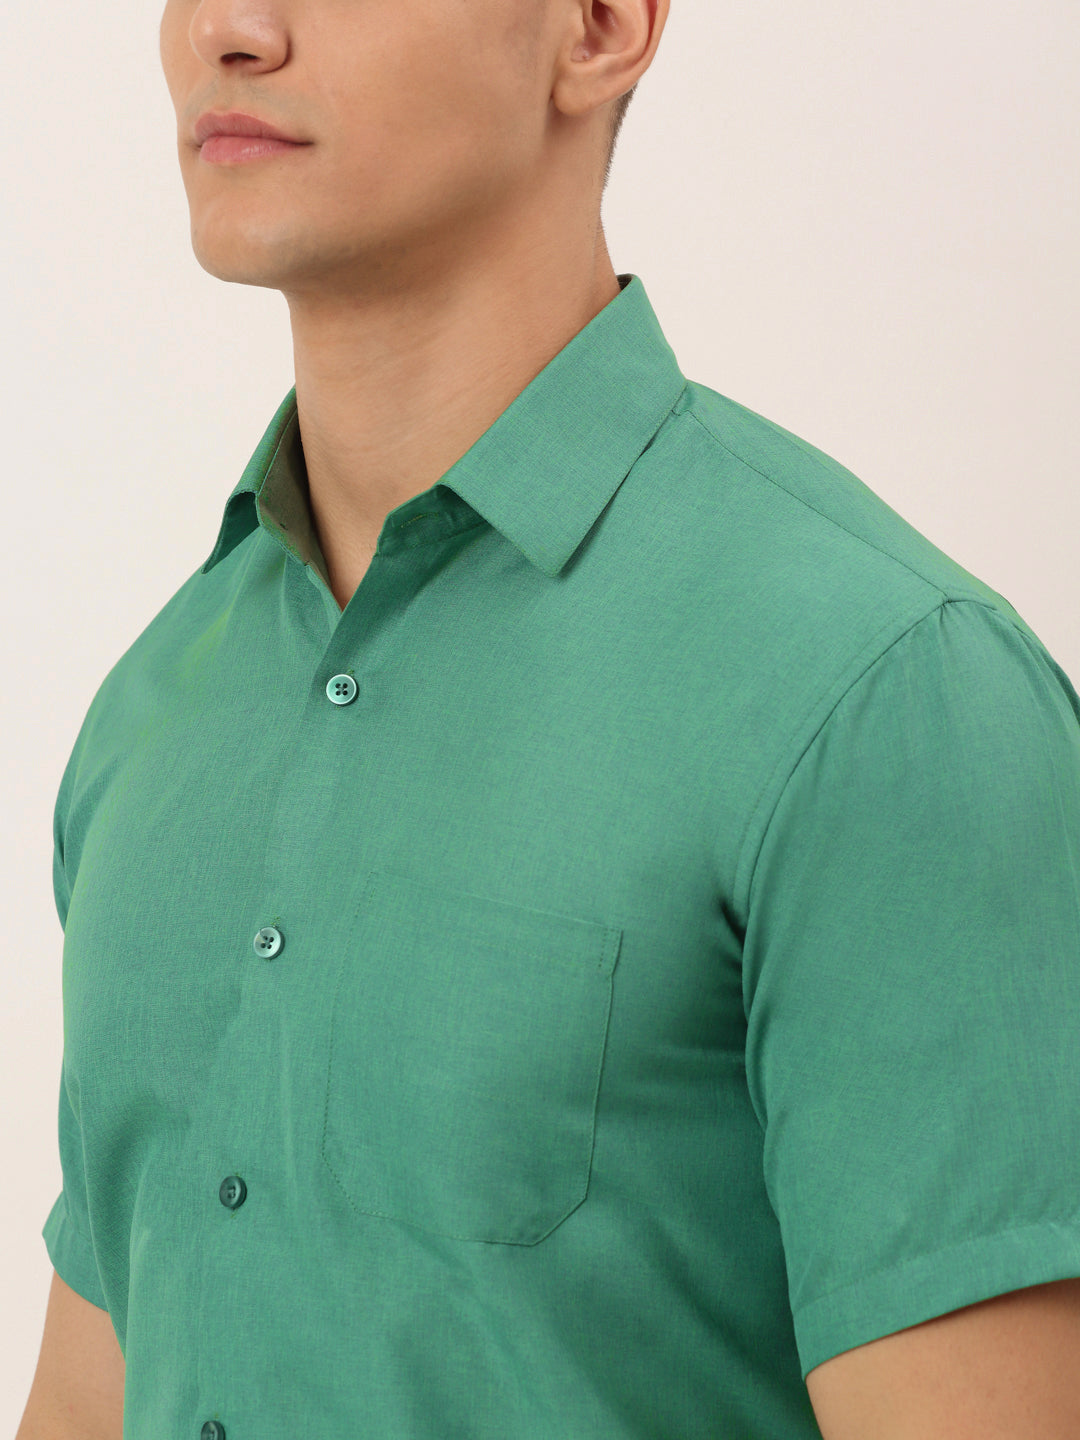 Men's Cotton Solid Half Sleeve Formal Shirts ( SF 811Green ) - Jainish